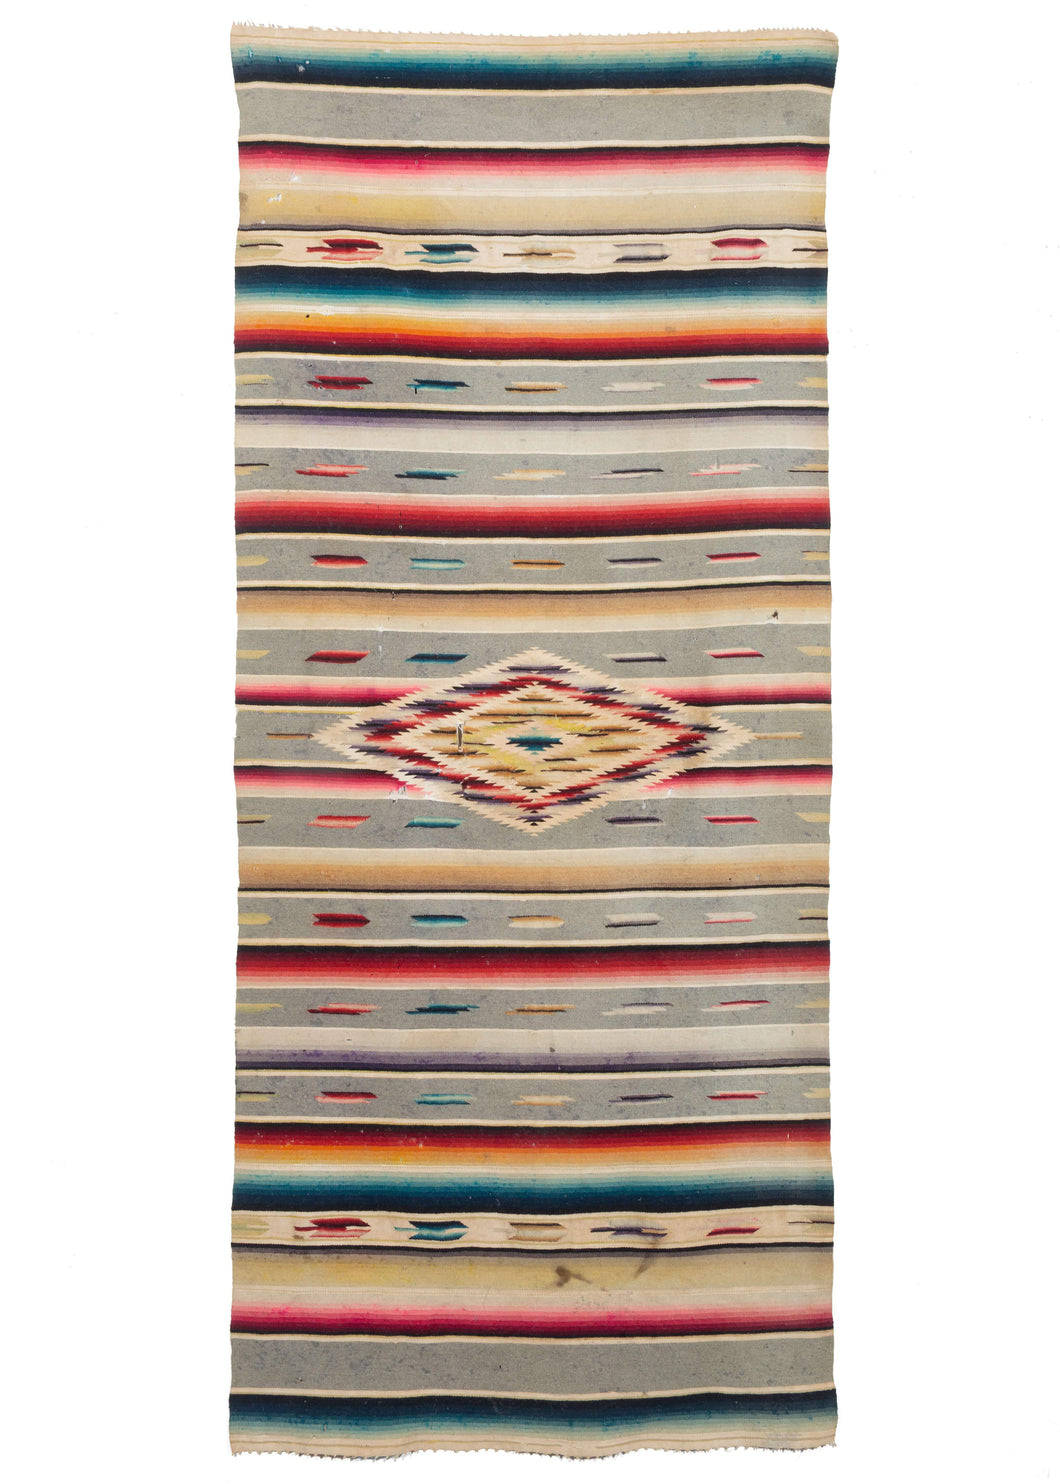 Vintage Mexican Serape Textile with extensive moth damage